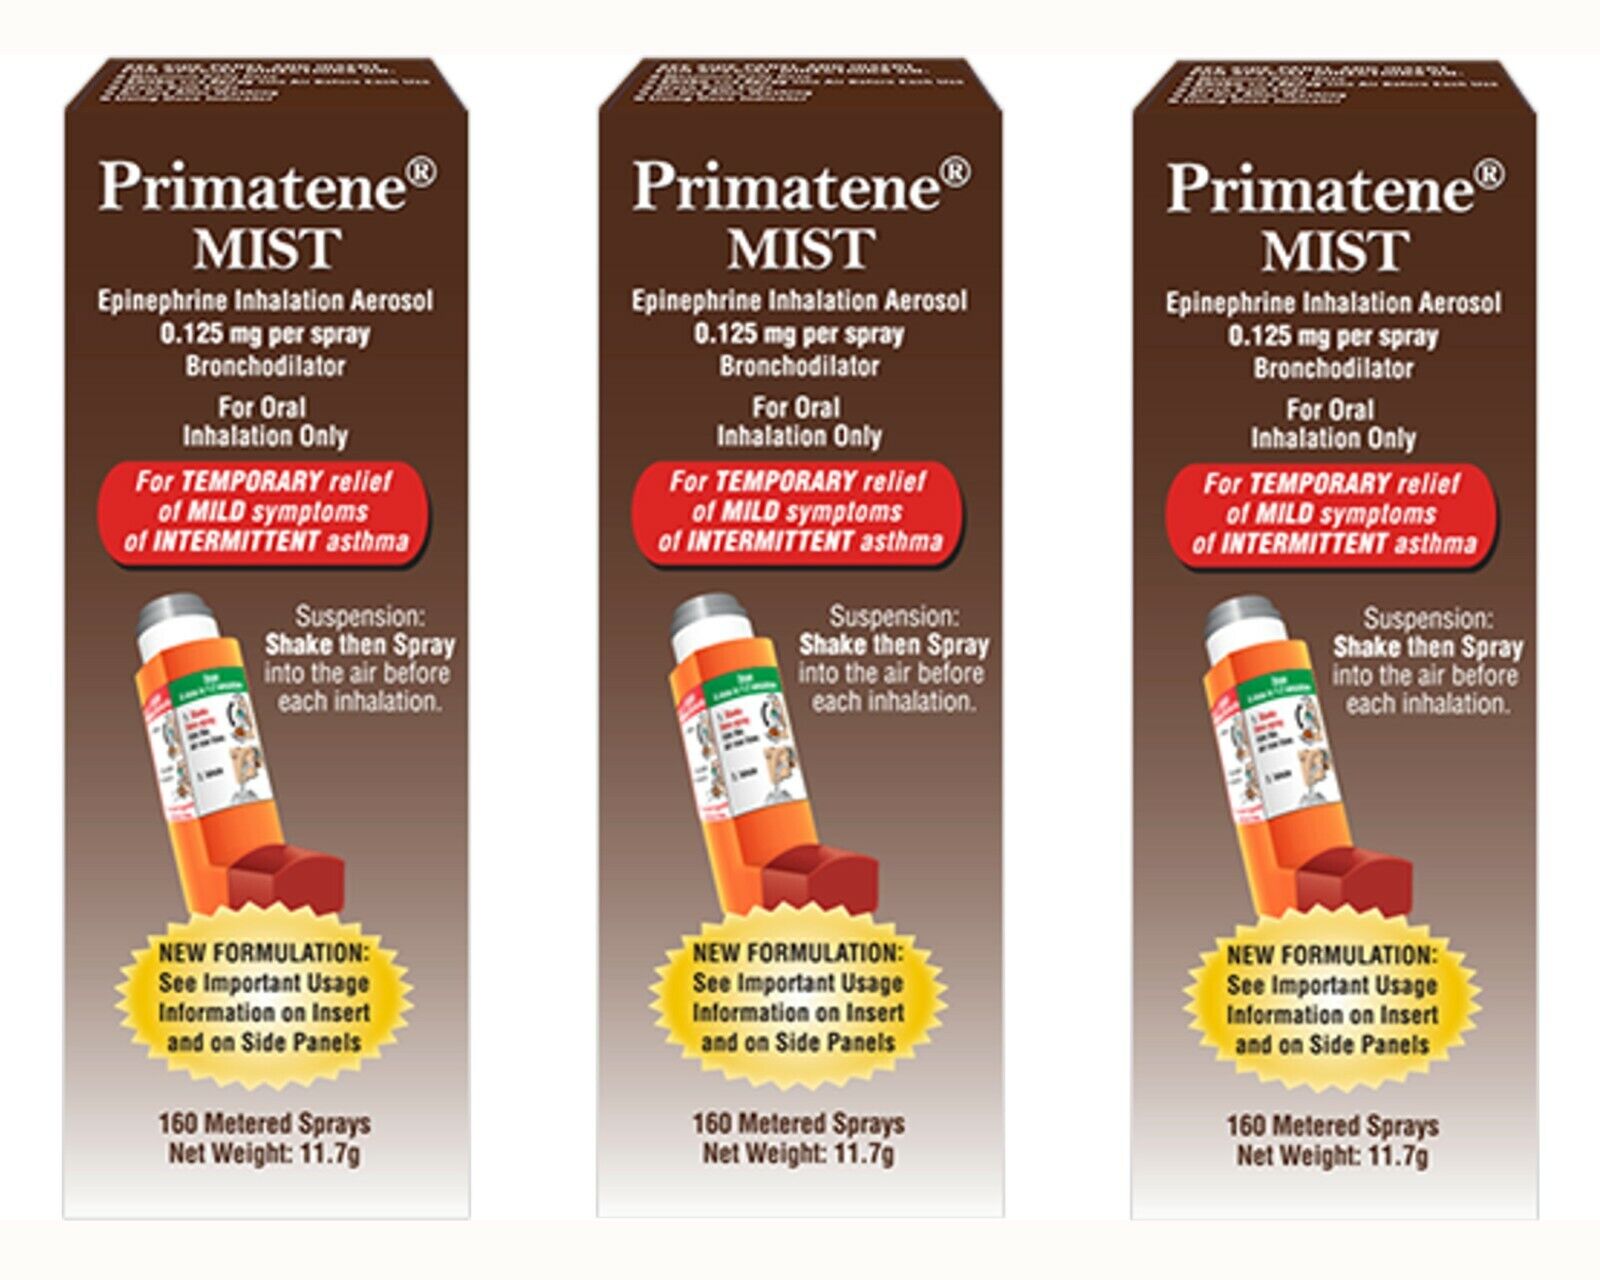 Primatene Mist Epinephrine Aerosol Inhaler (160 Sprays) EXP 3/22 - 3 NIB Sealed